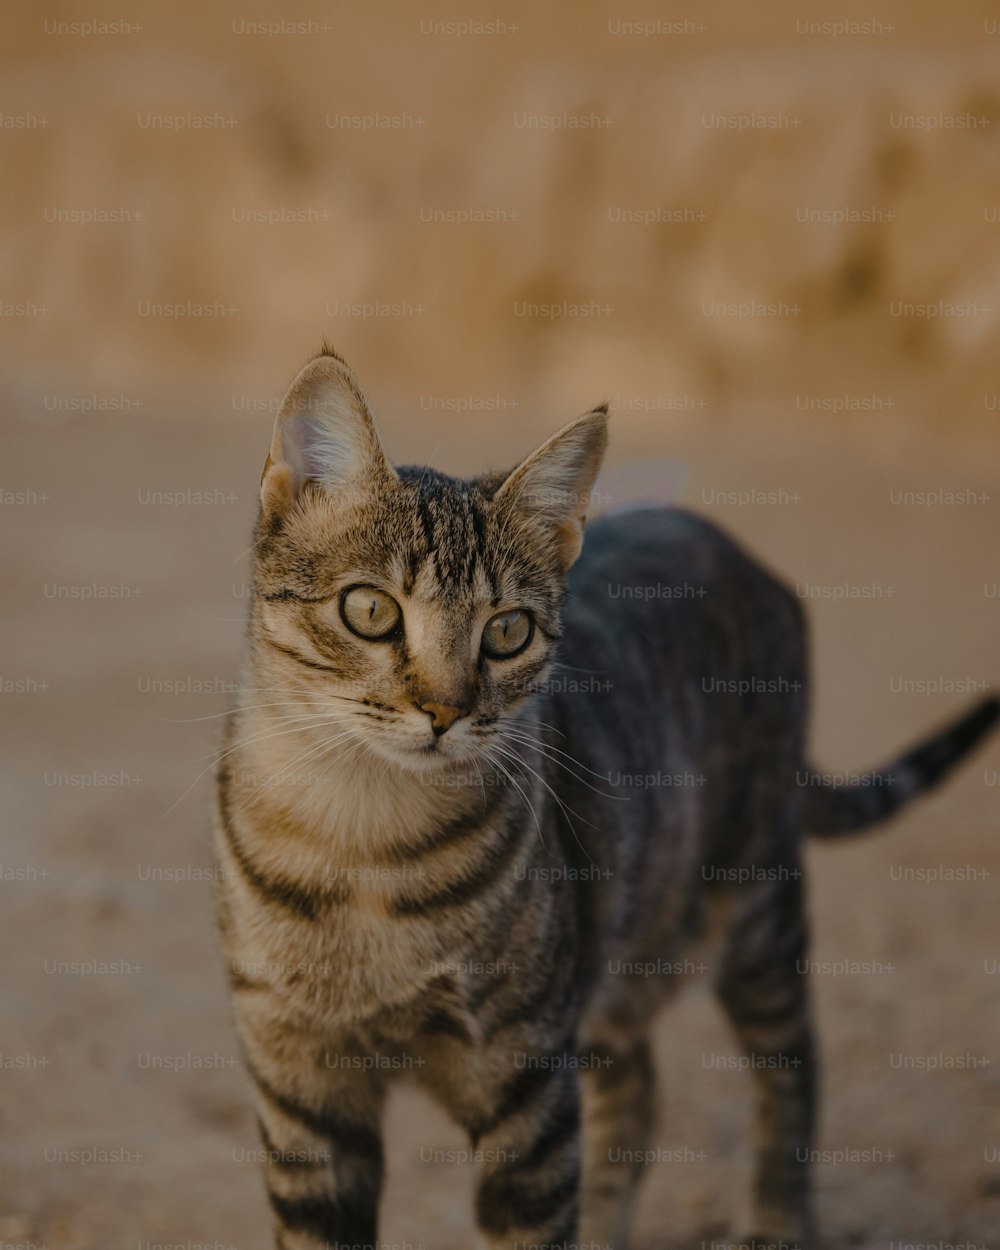 a small cat walking across a dirt field